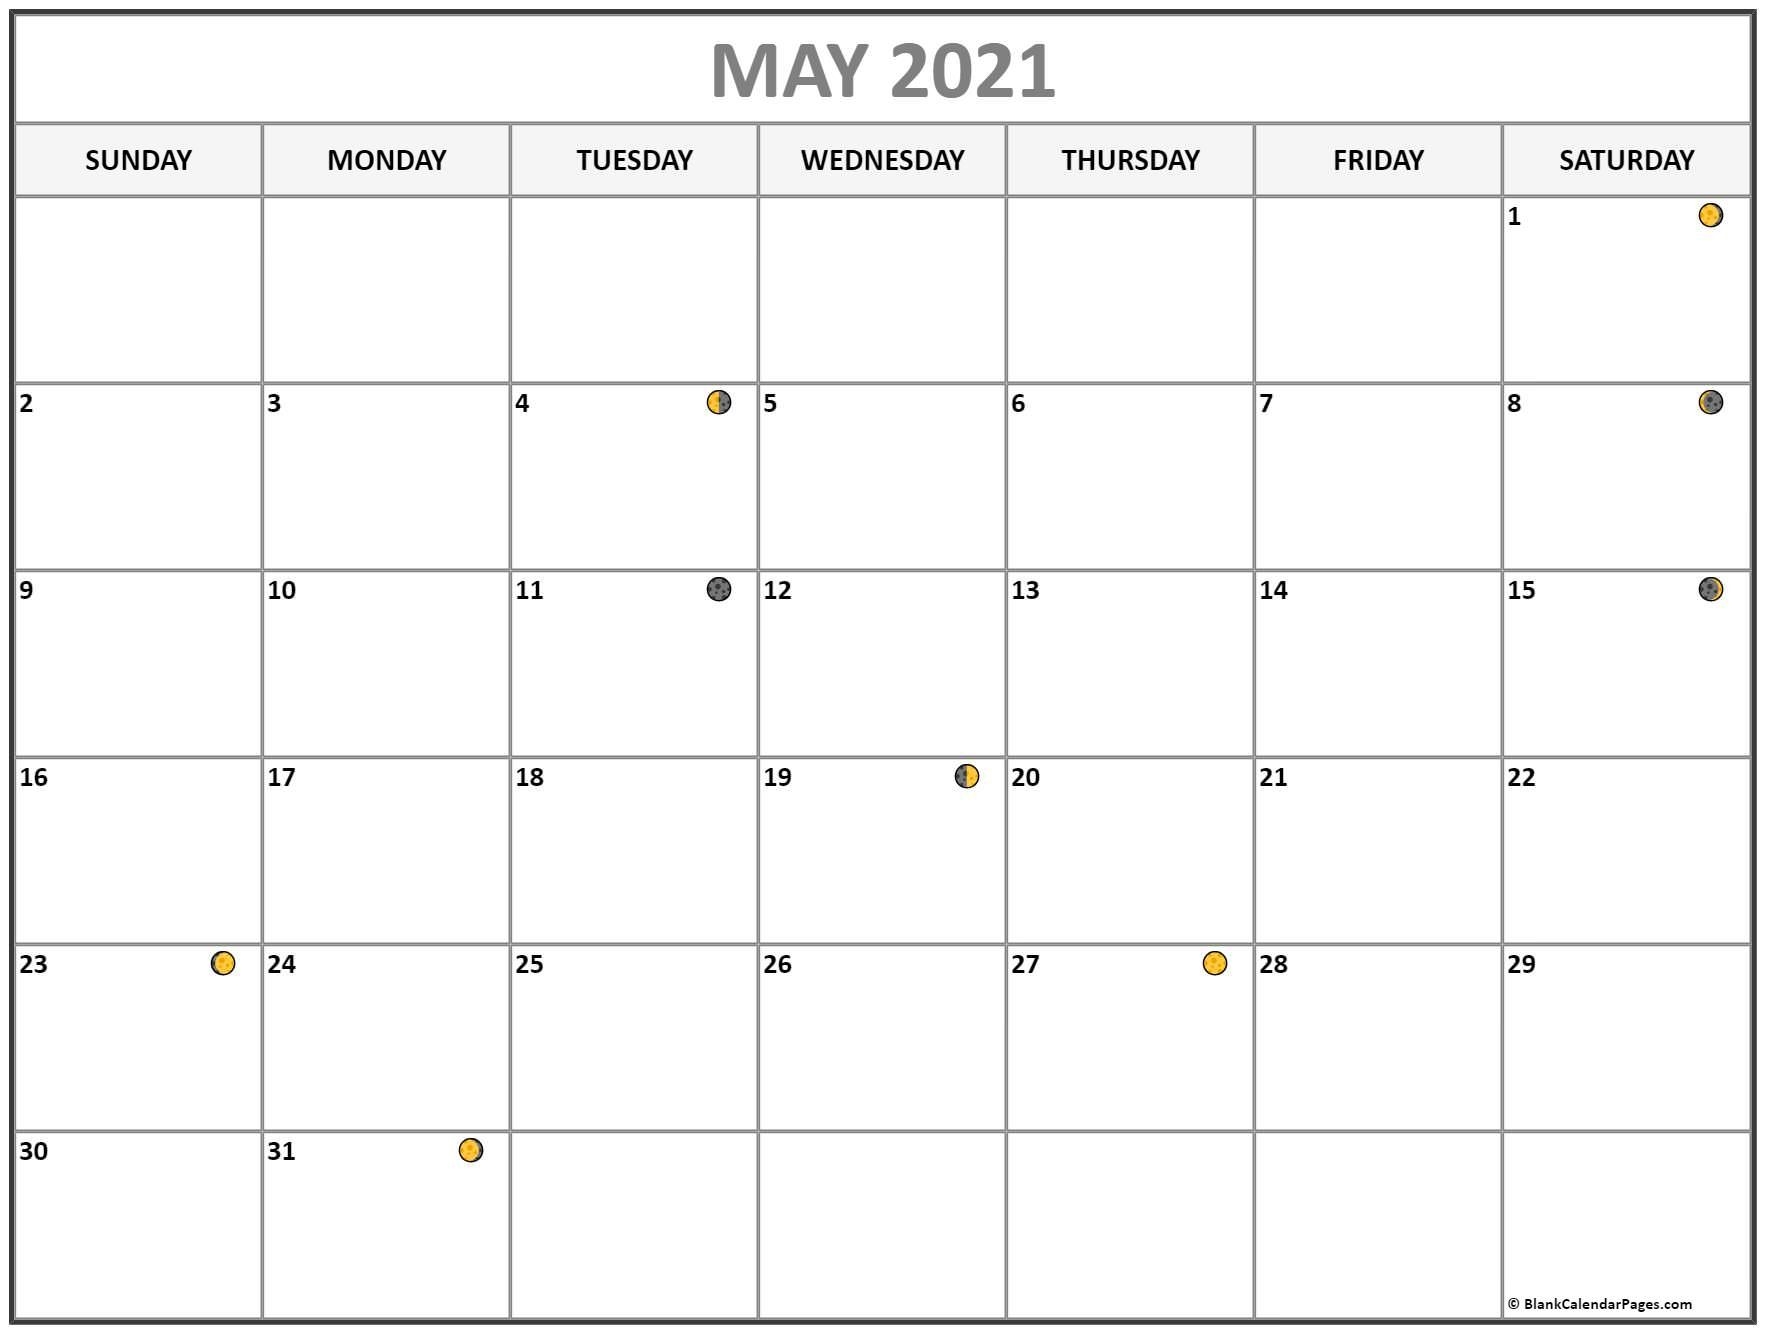 may 2021 lunar calendar | moon phase calendar